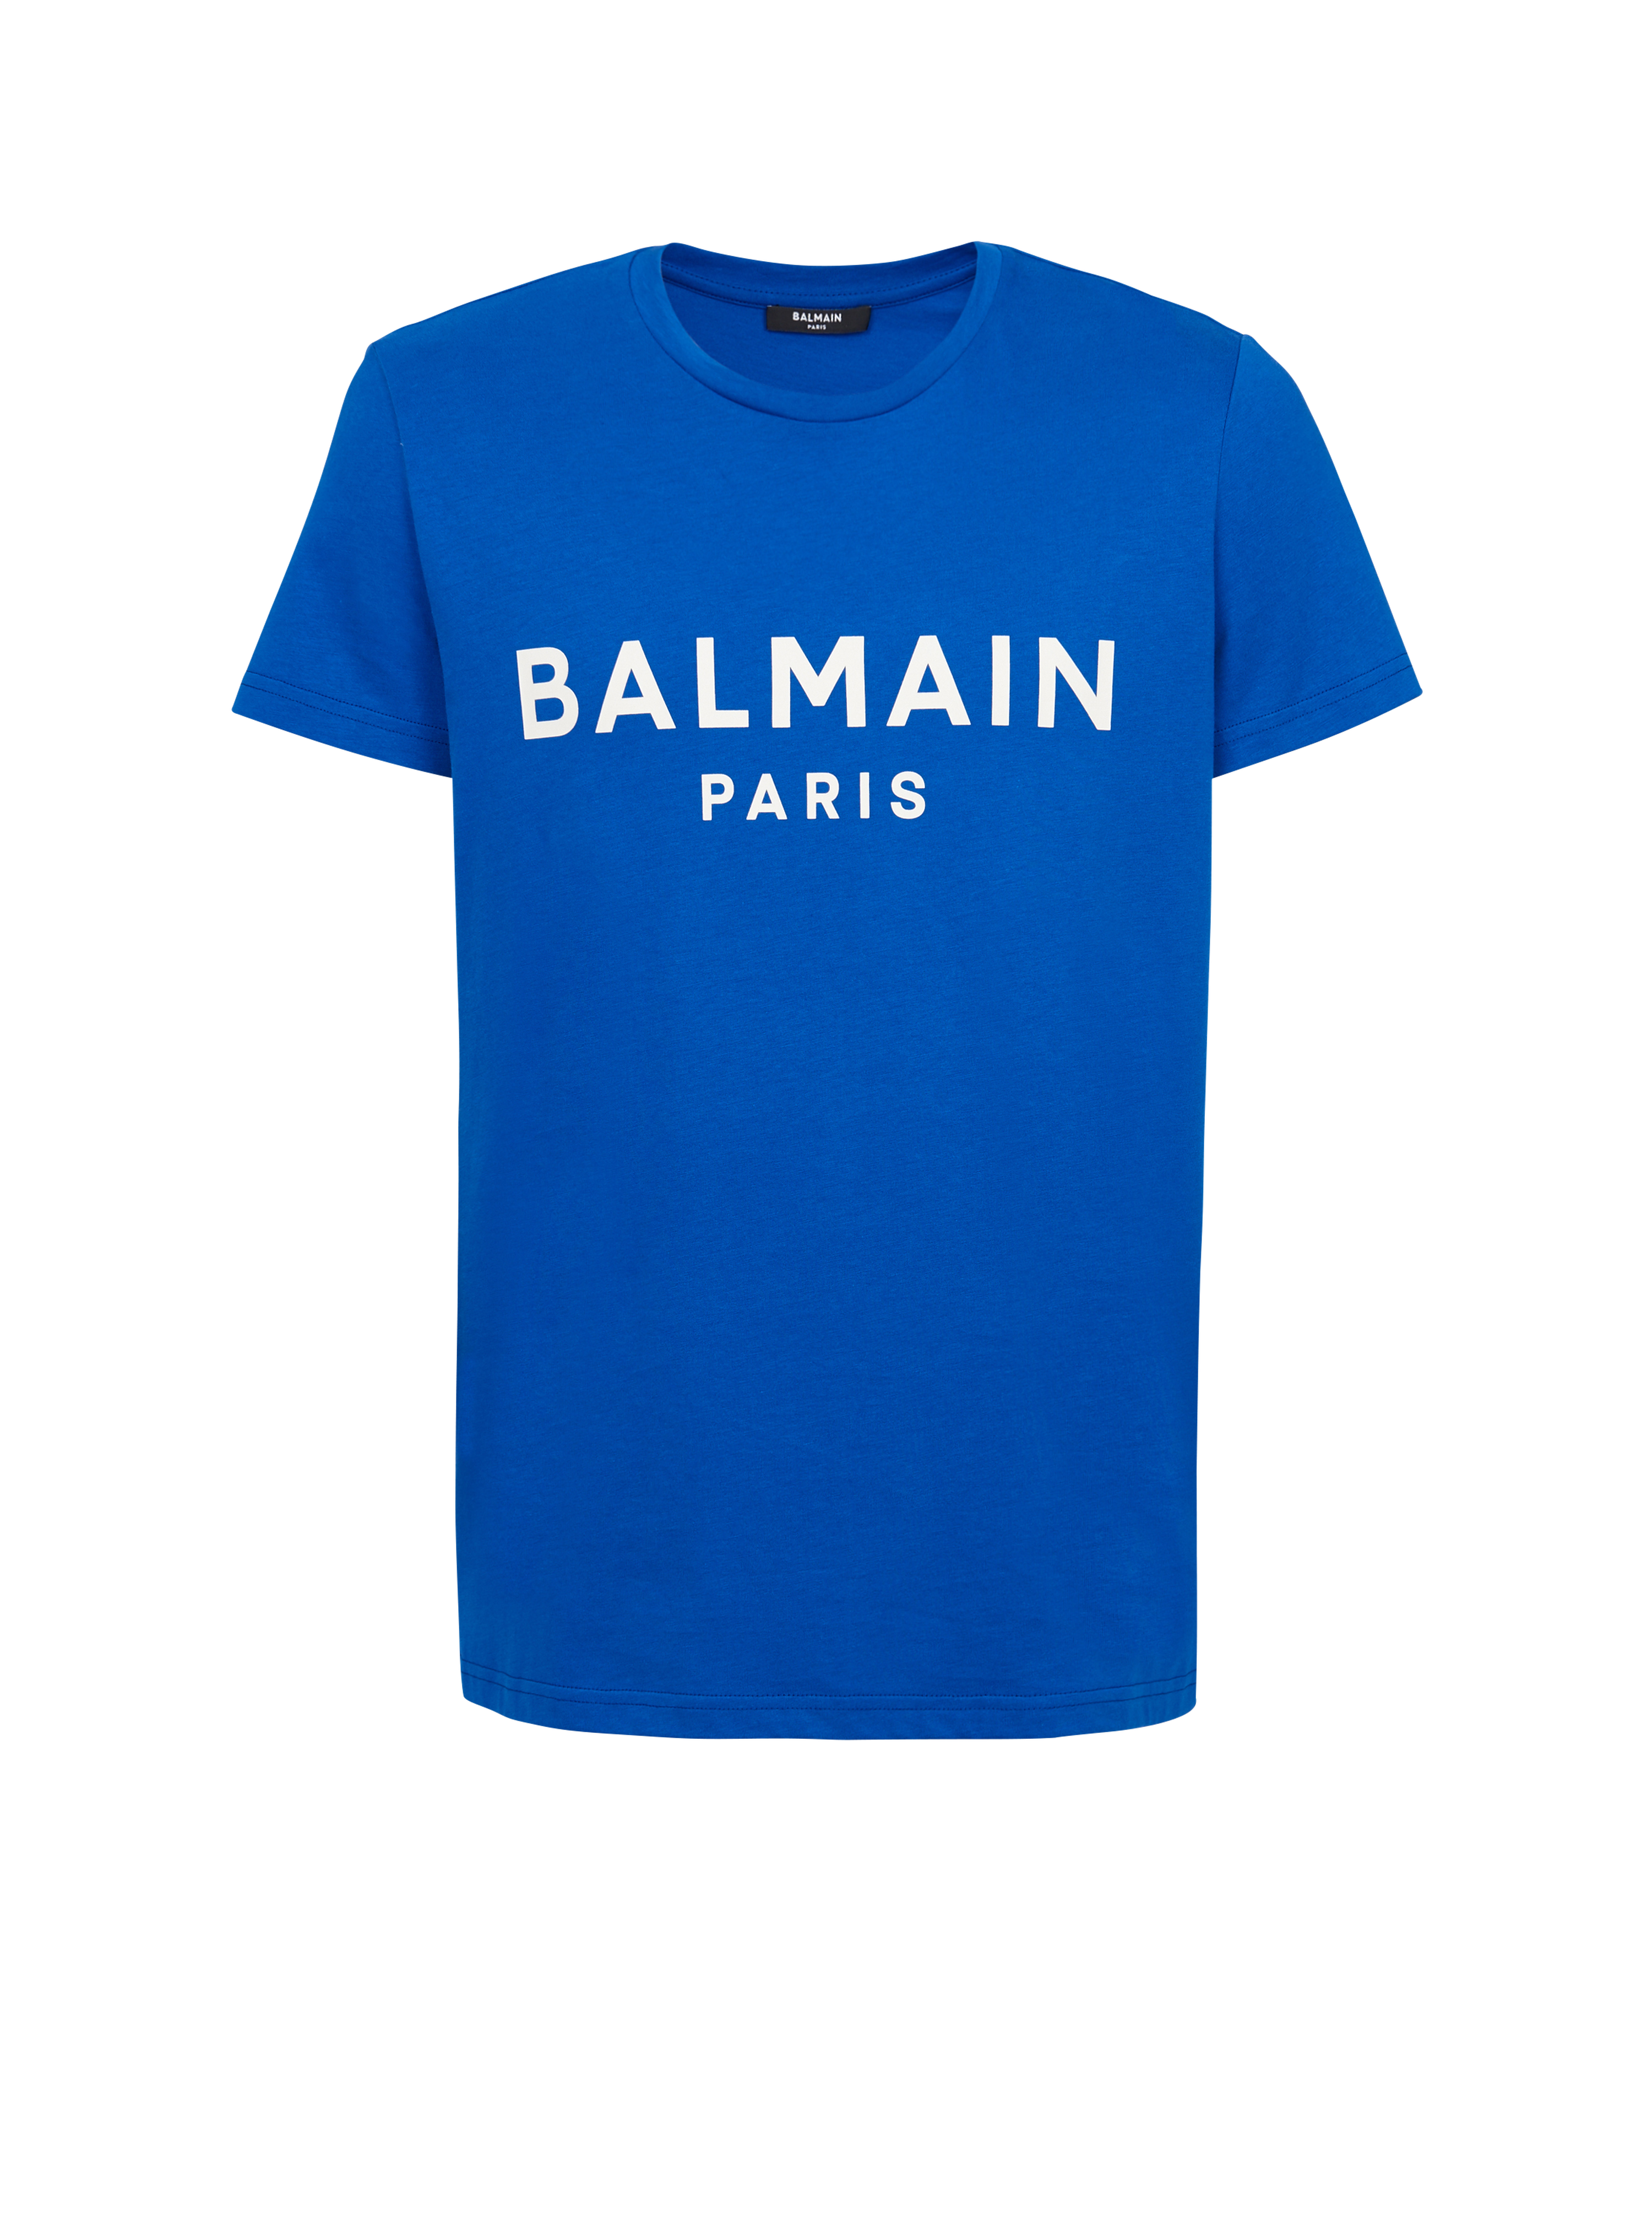 Eco-responsible cotton T-shirt with Balmain logo print, blue